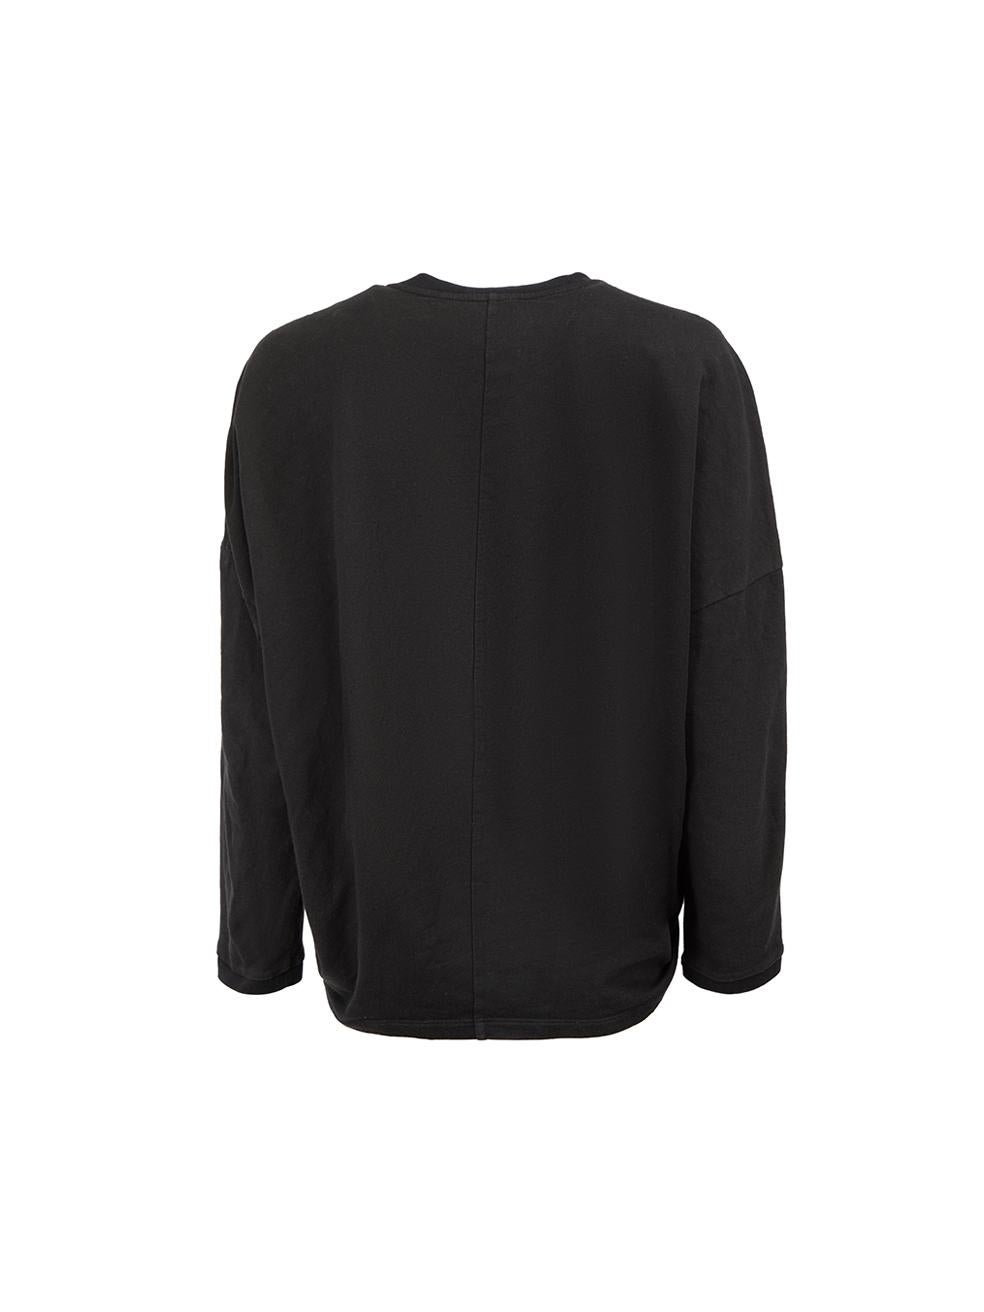 Giambattista Valli Black Felt Layer Sweatshirt Size XS In Good Condition For Sale In London, GB